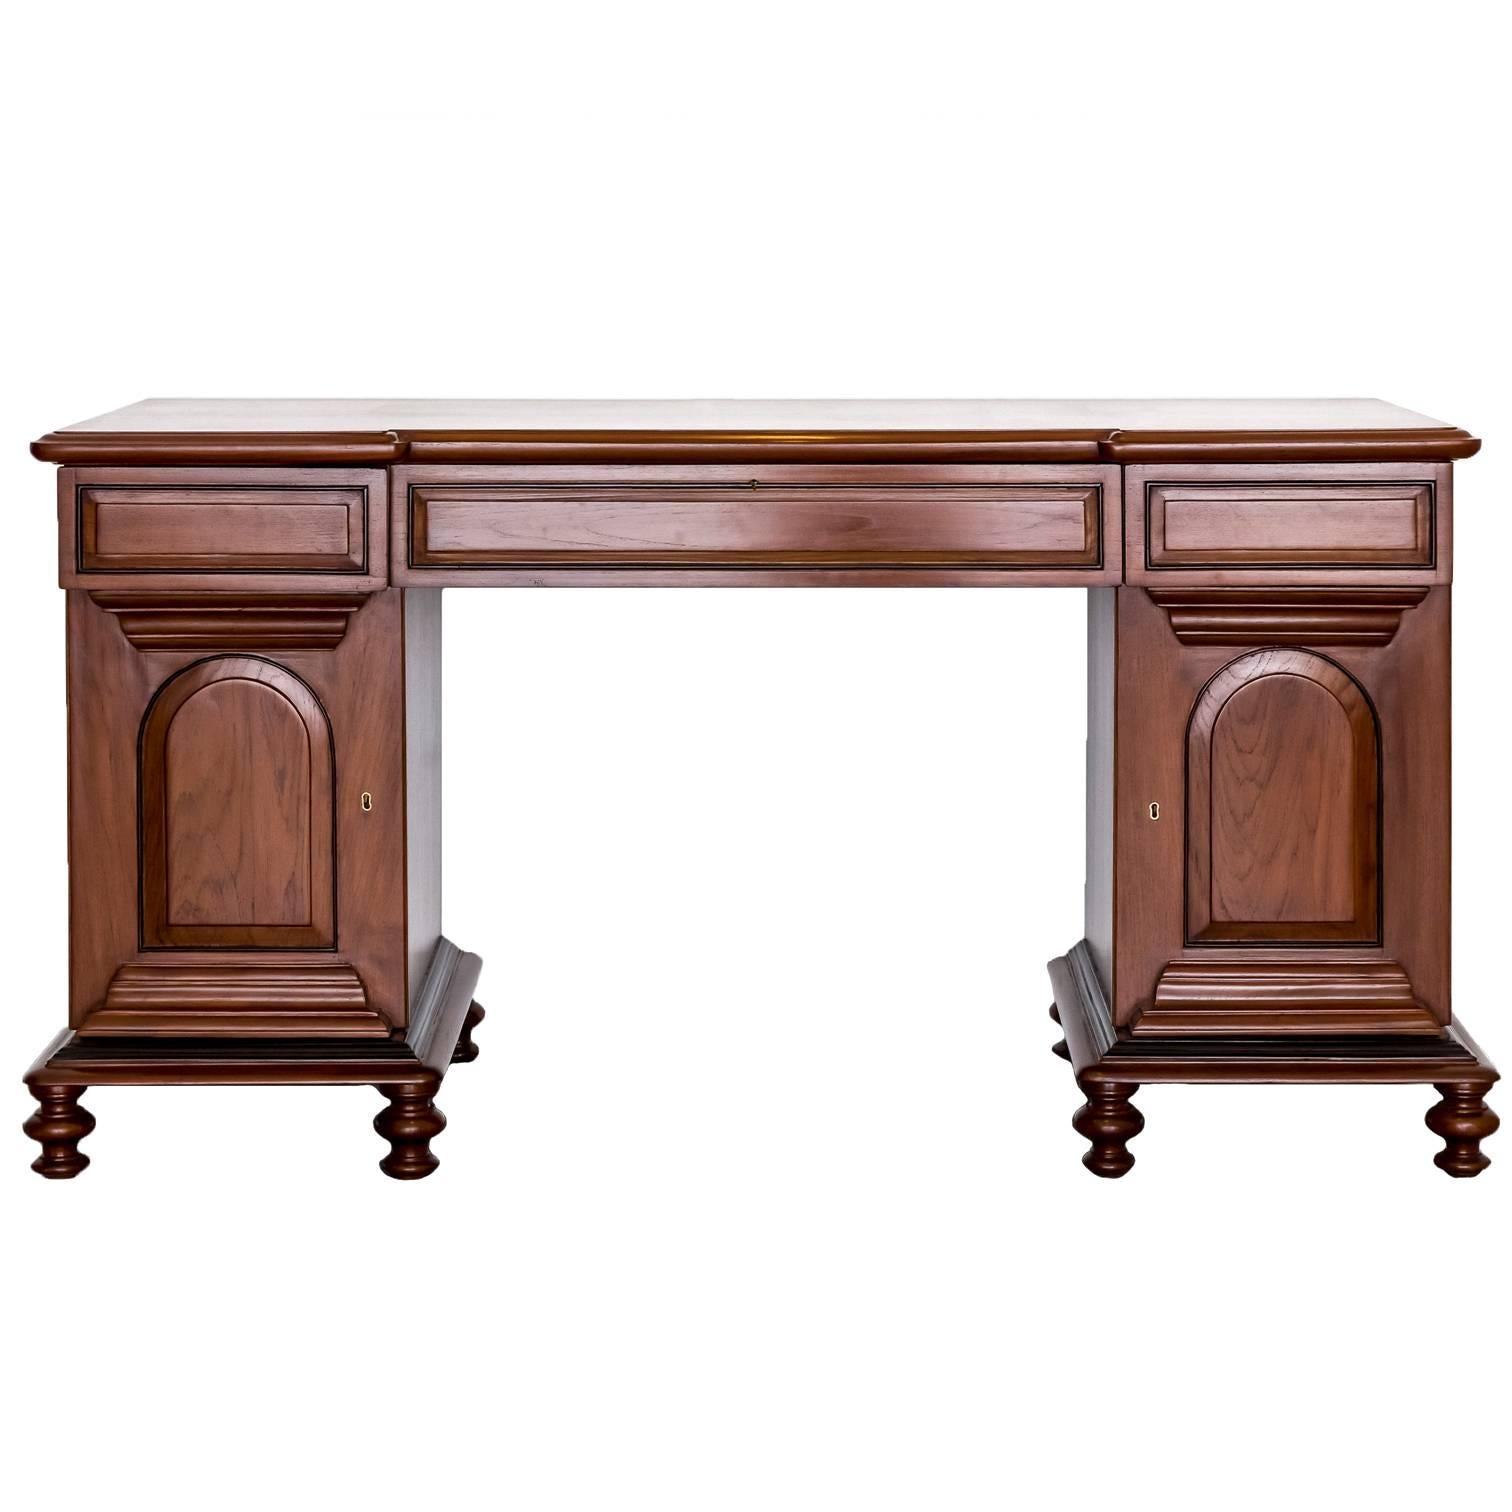 Antique Anglo-Indian or British Colonial Teak Wood Pedestal Desk For Sale